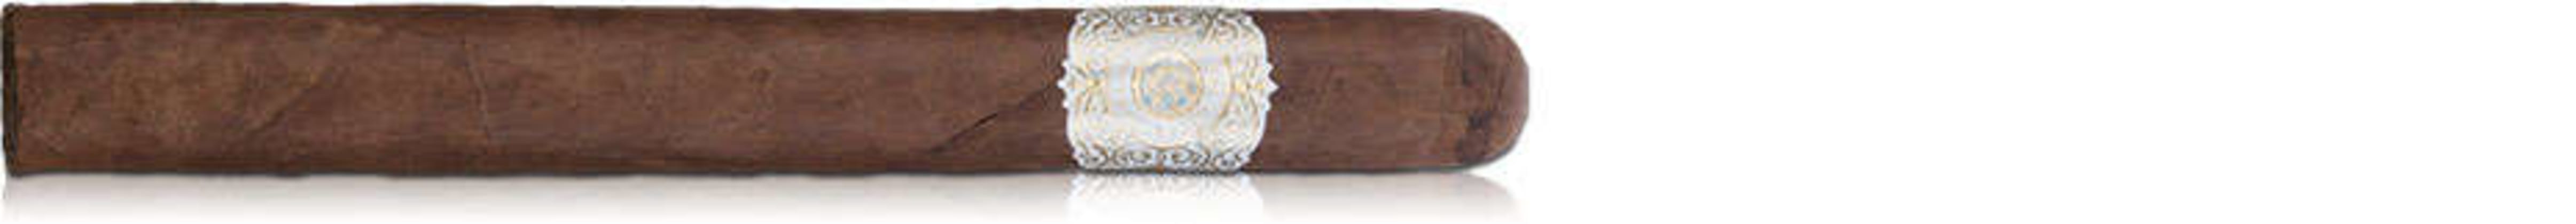 Flor del Valle By Warped Cigars Cristales Single